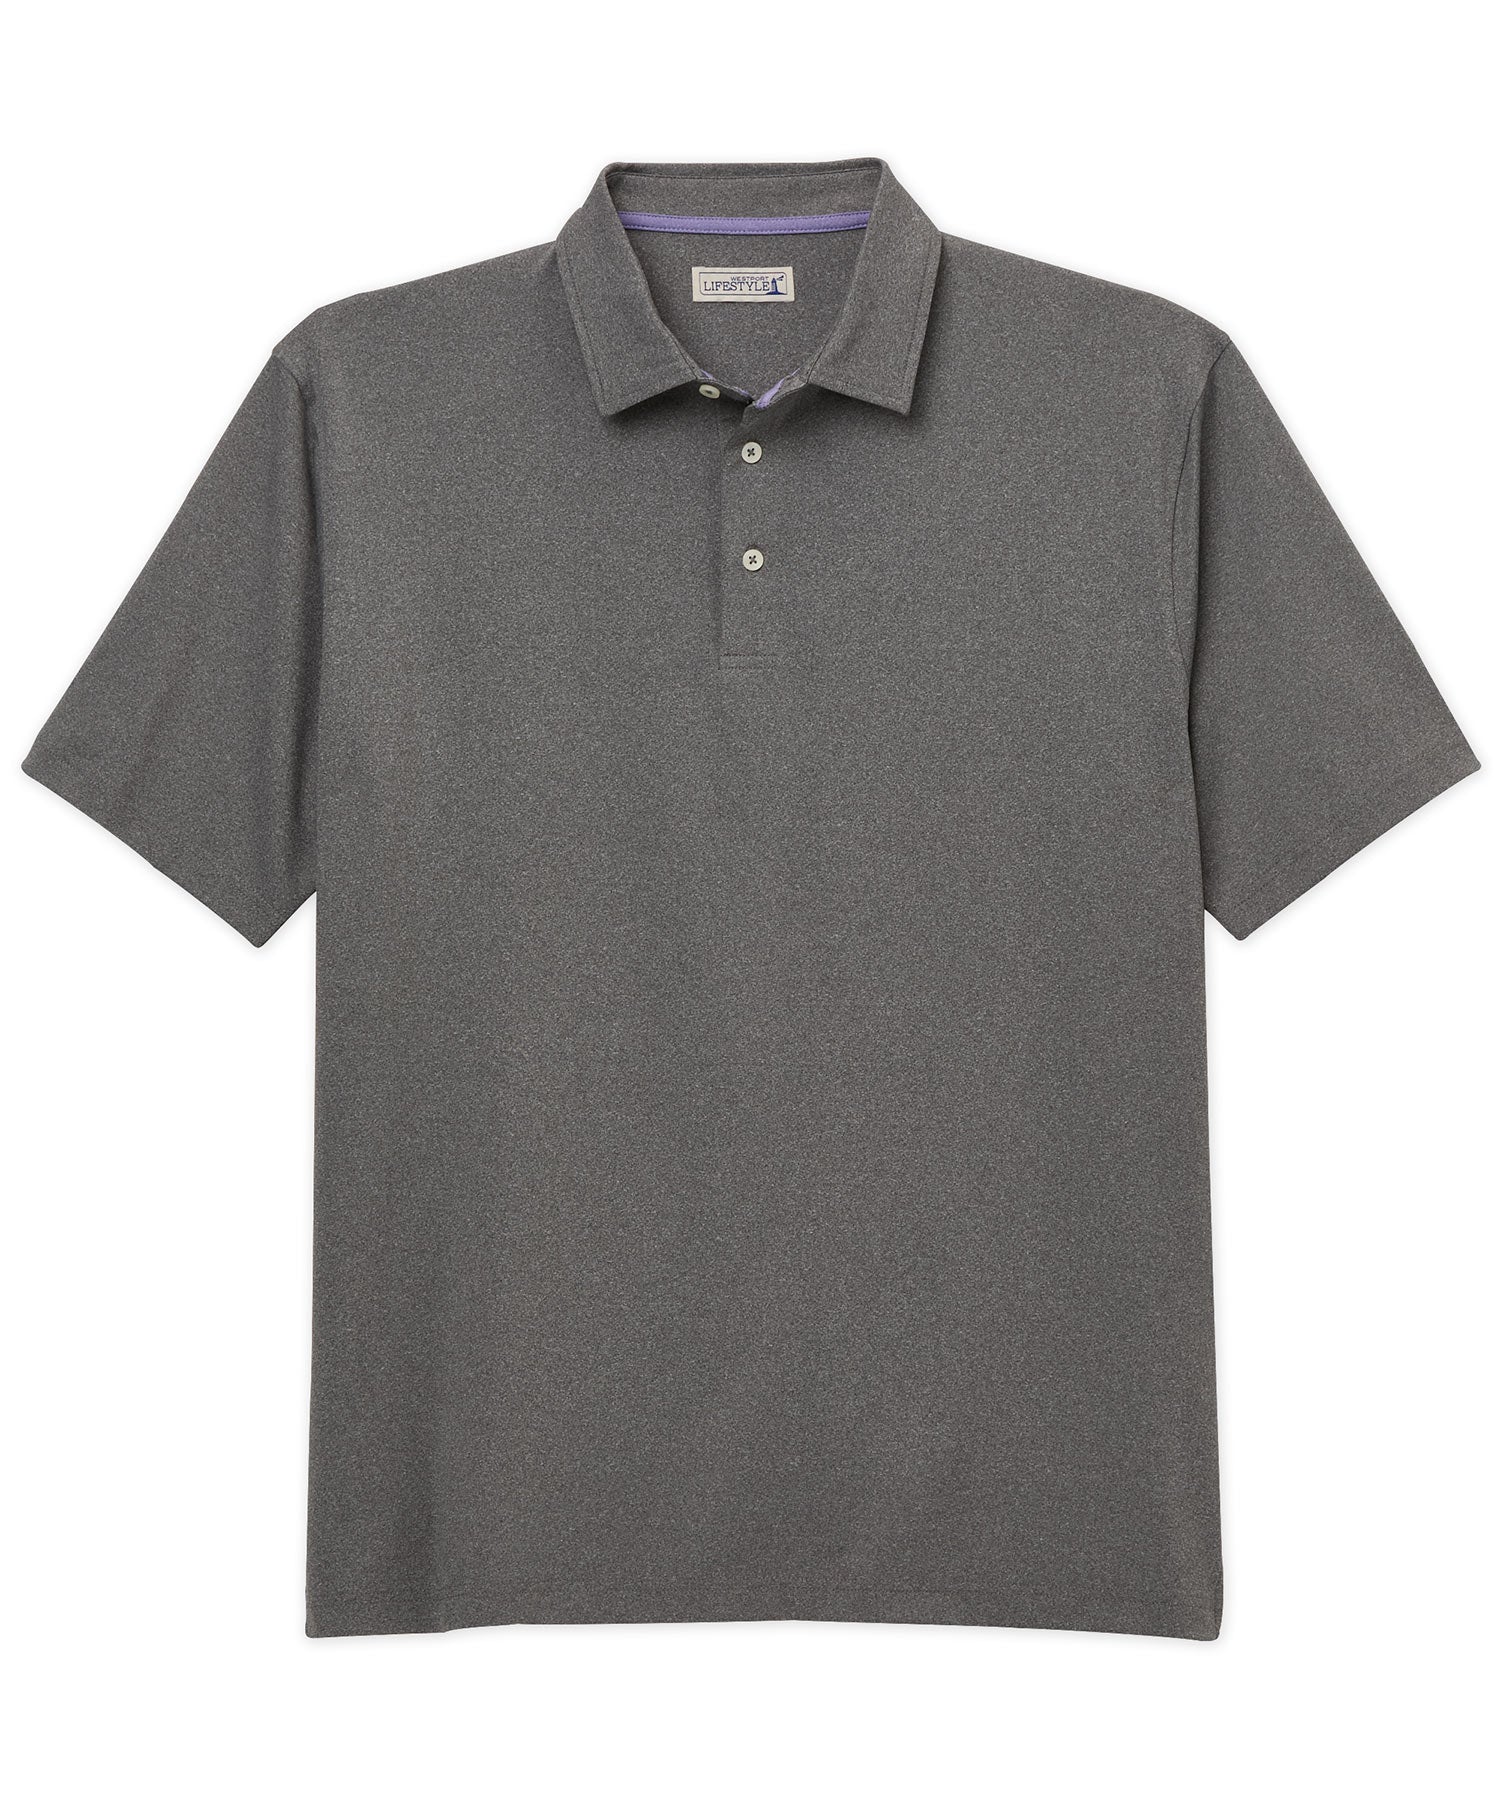 Westport Lifestyle Short Sleeve Performance Polo Knit Shirt, Men's Big & Tall